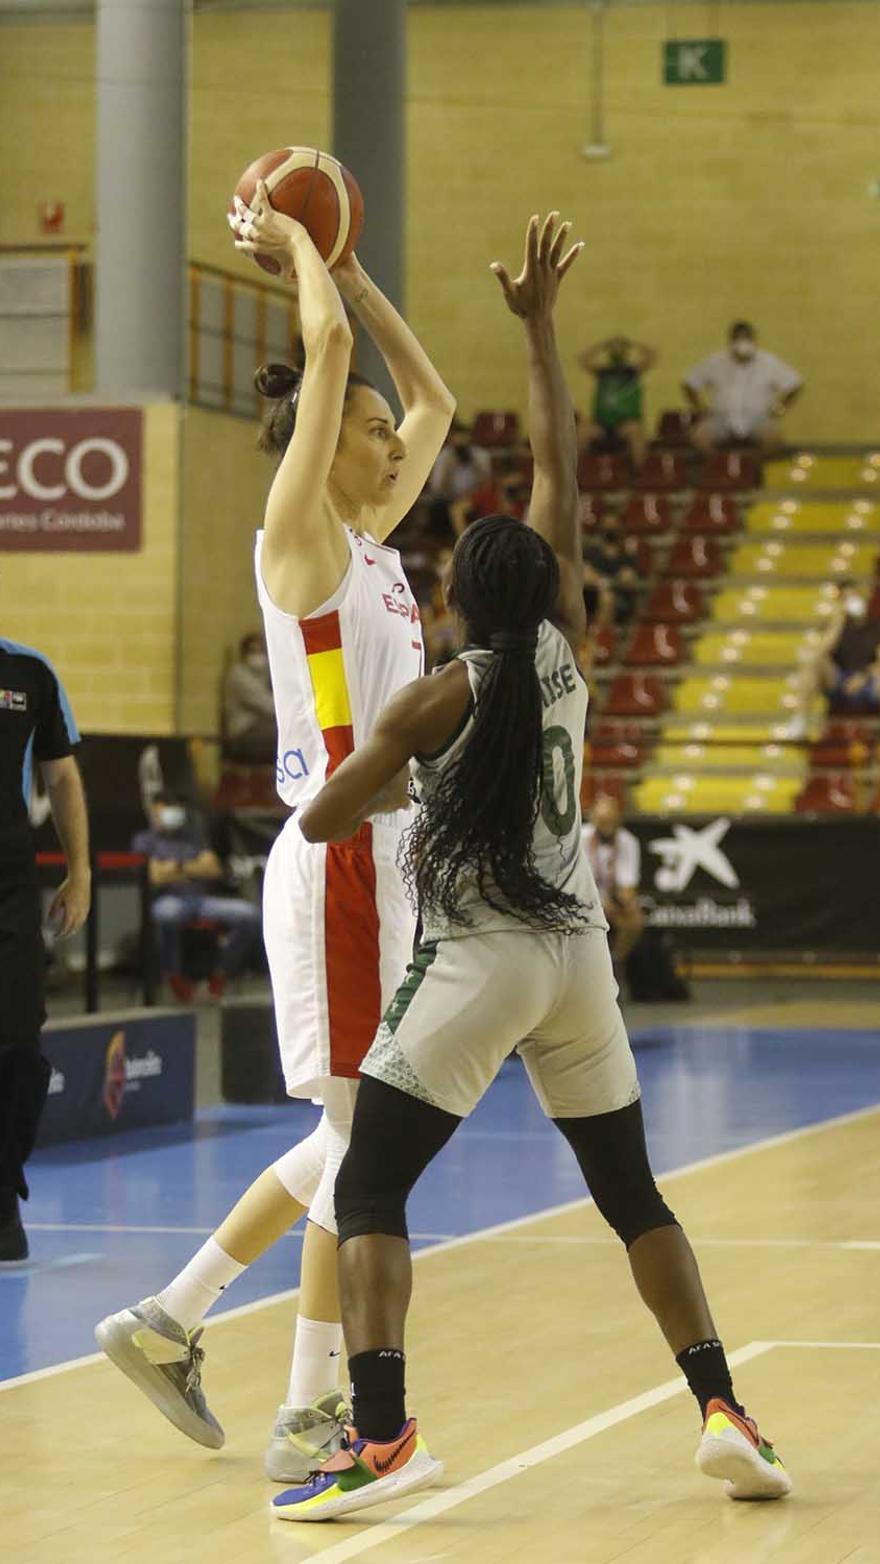 Torneo de selecciones de baloncesto femenino: España - Kenia